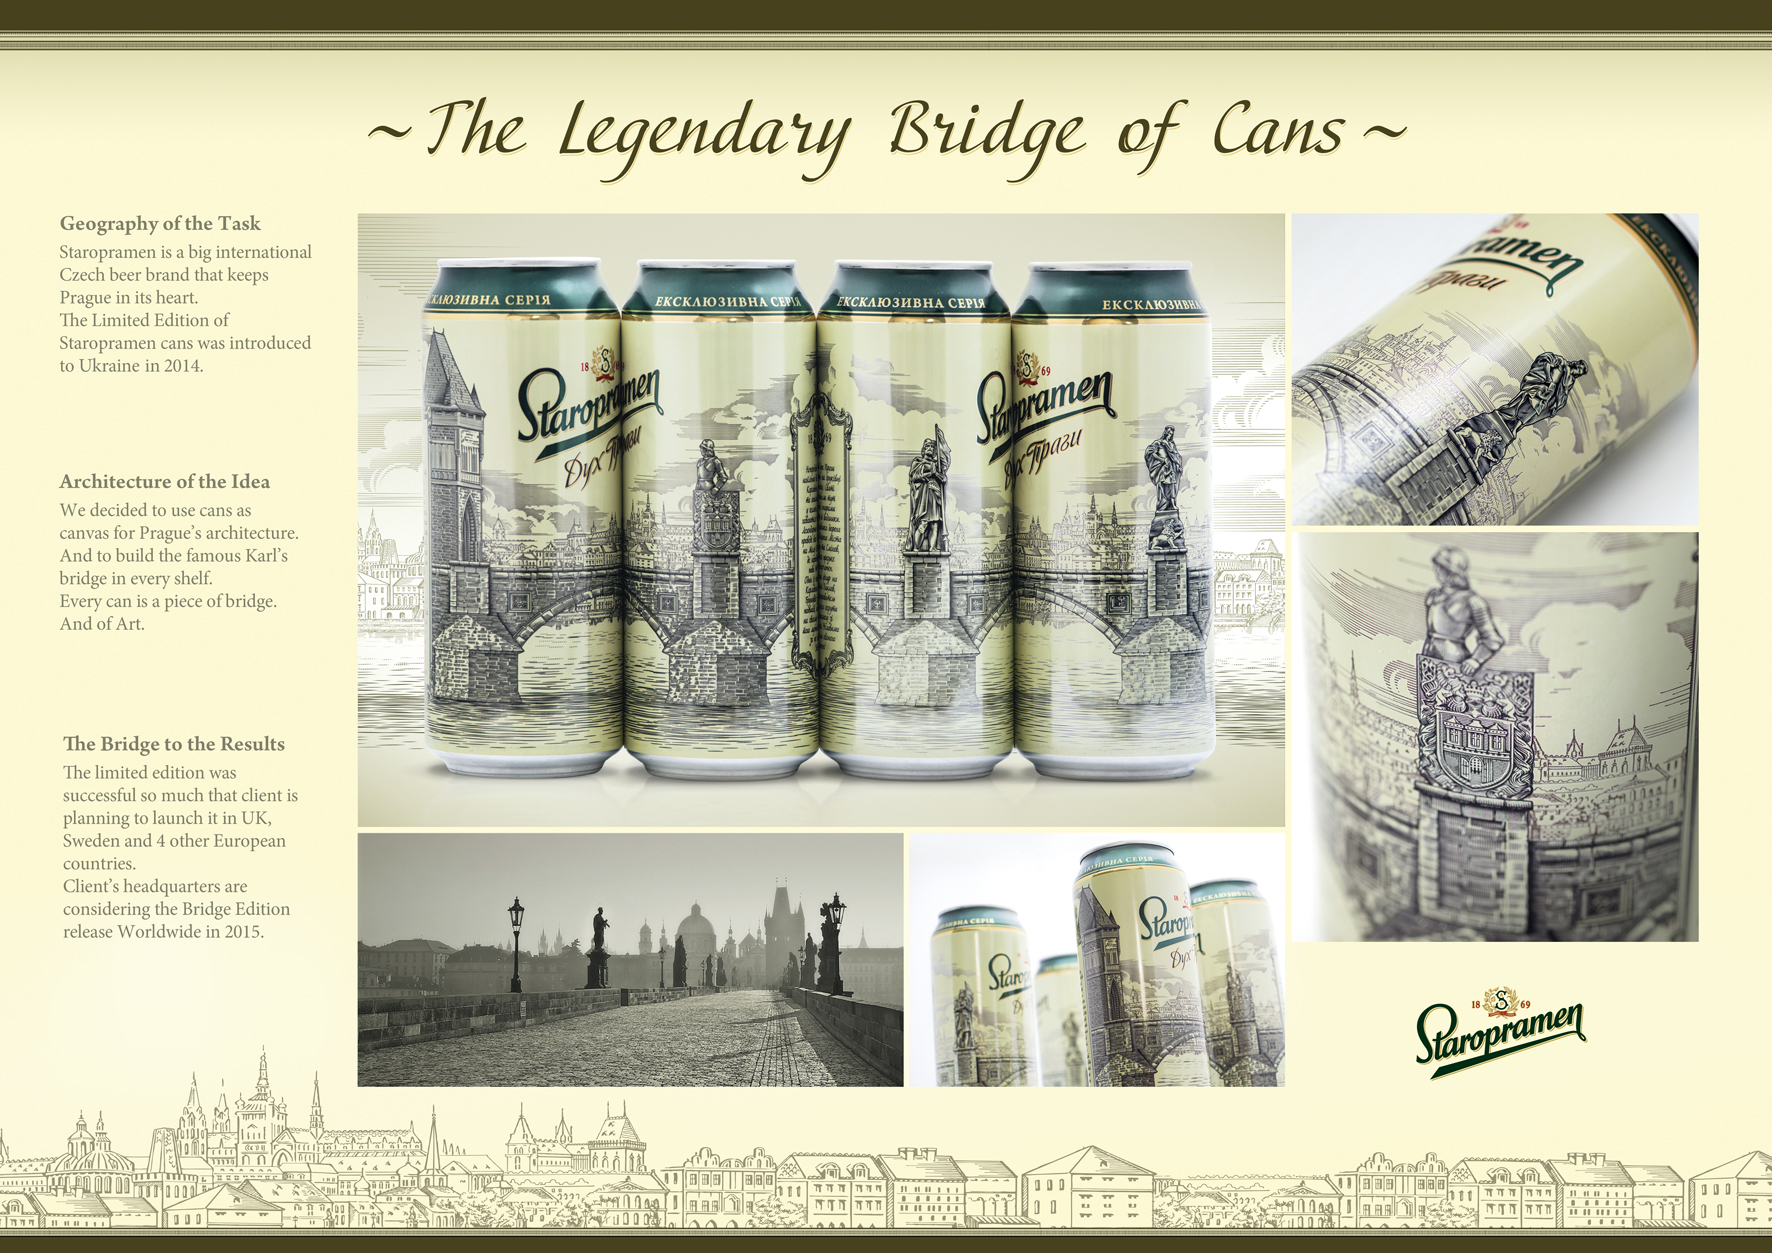 THE LEGENDARY BRIDGE OF CANS